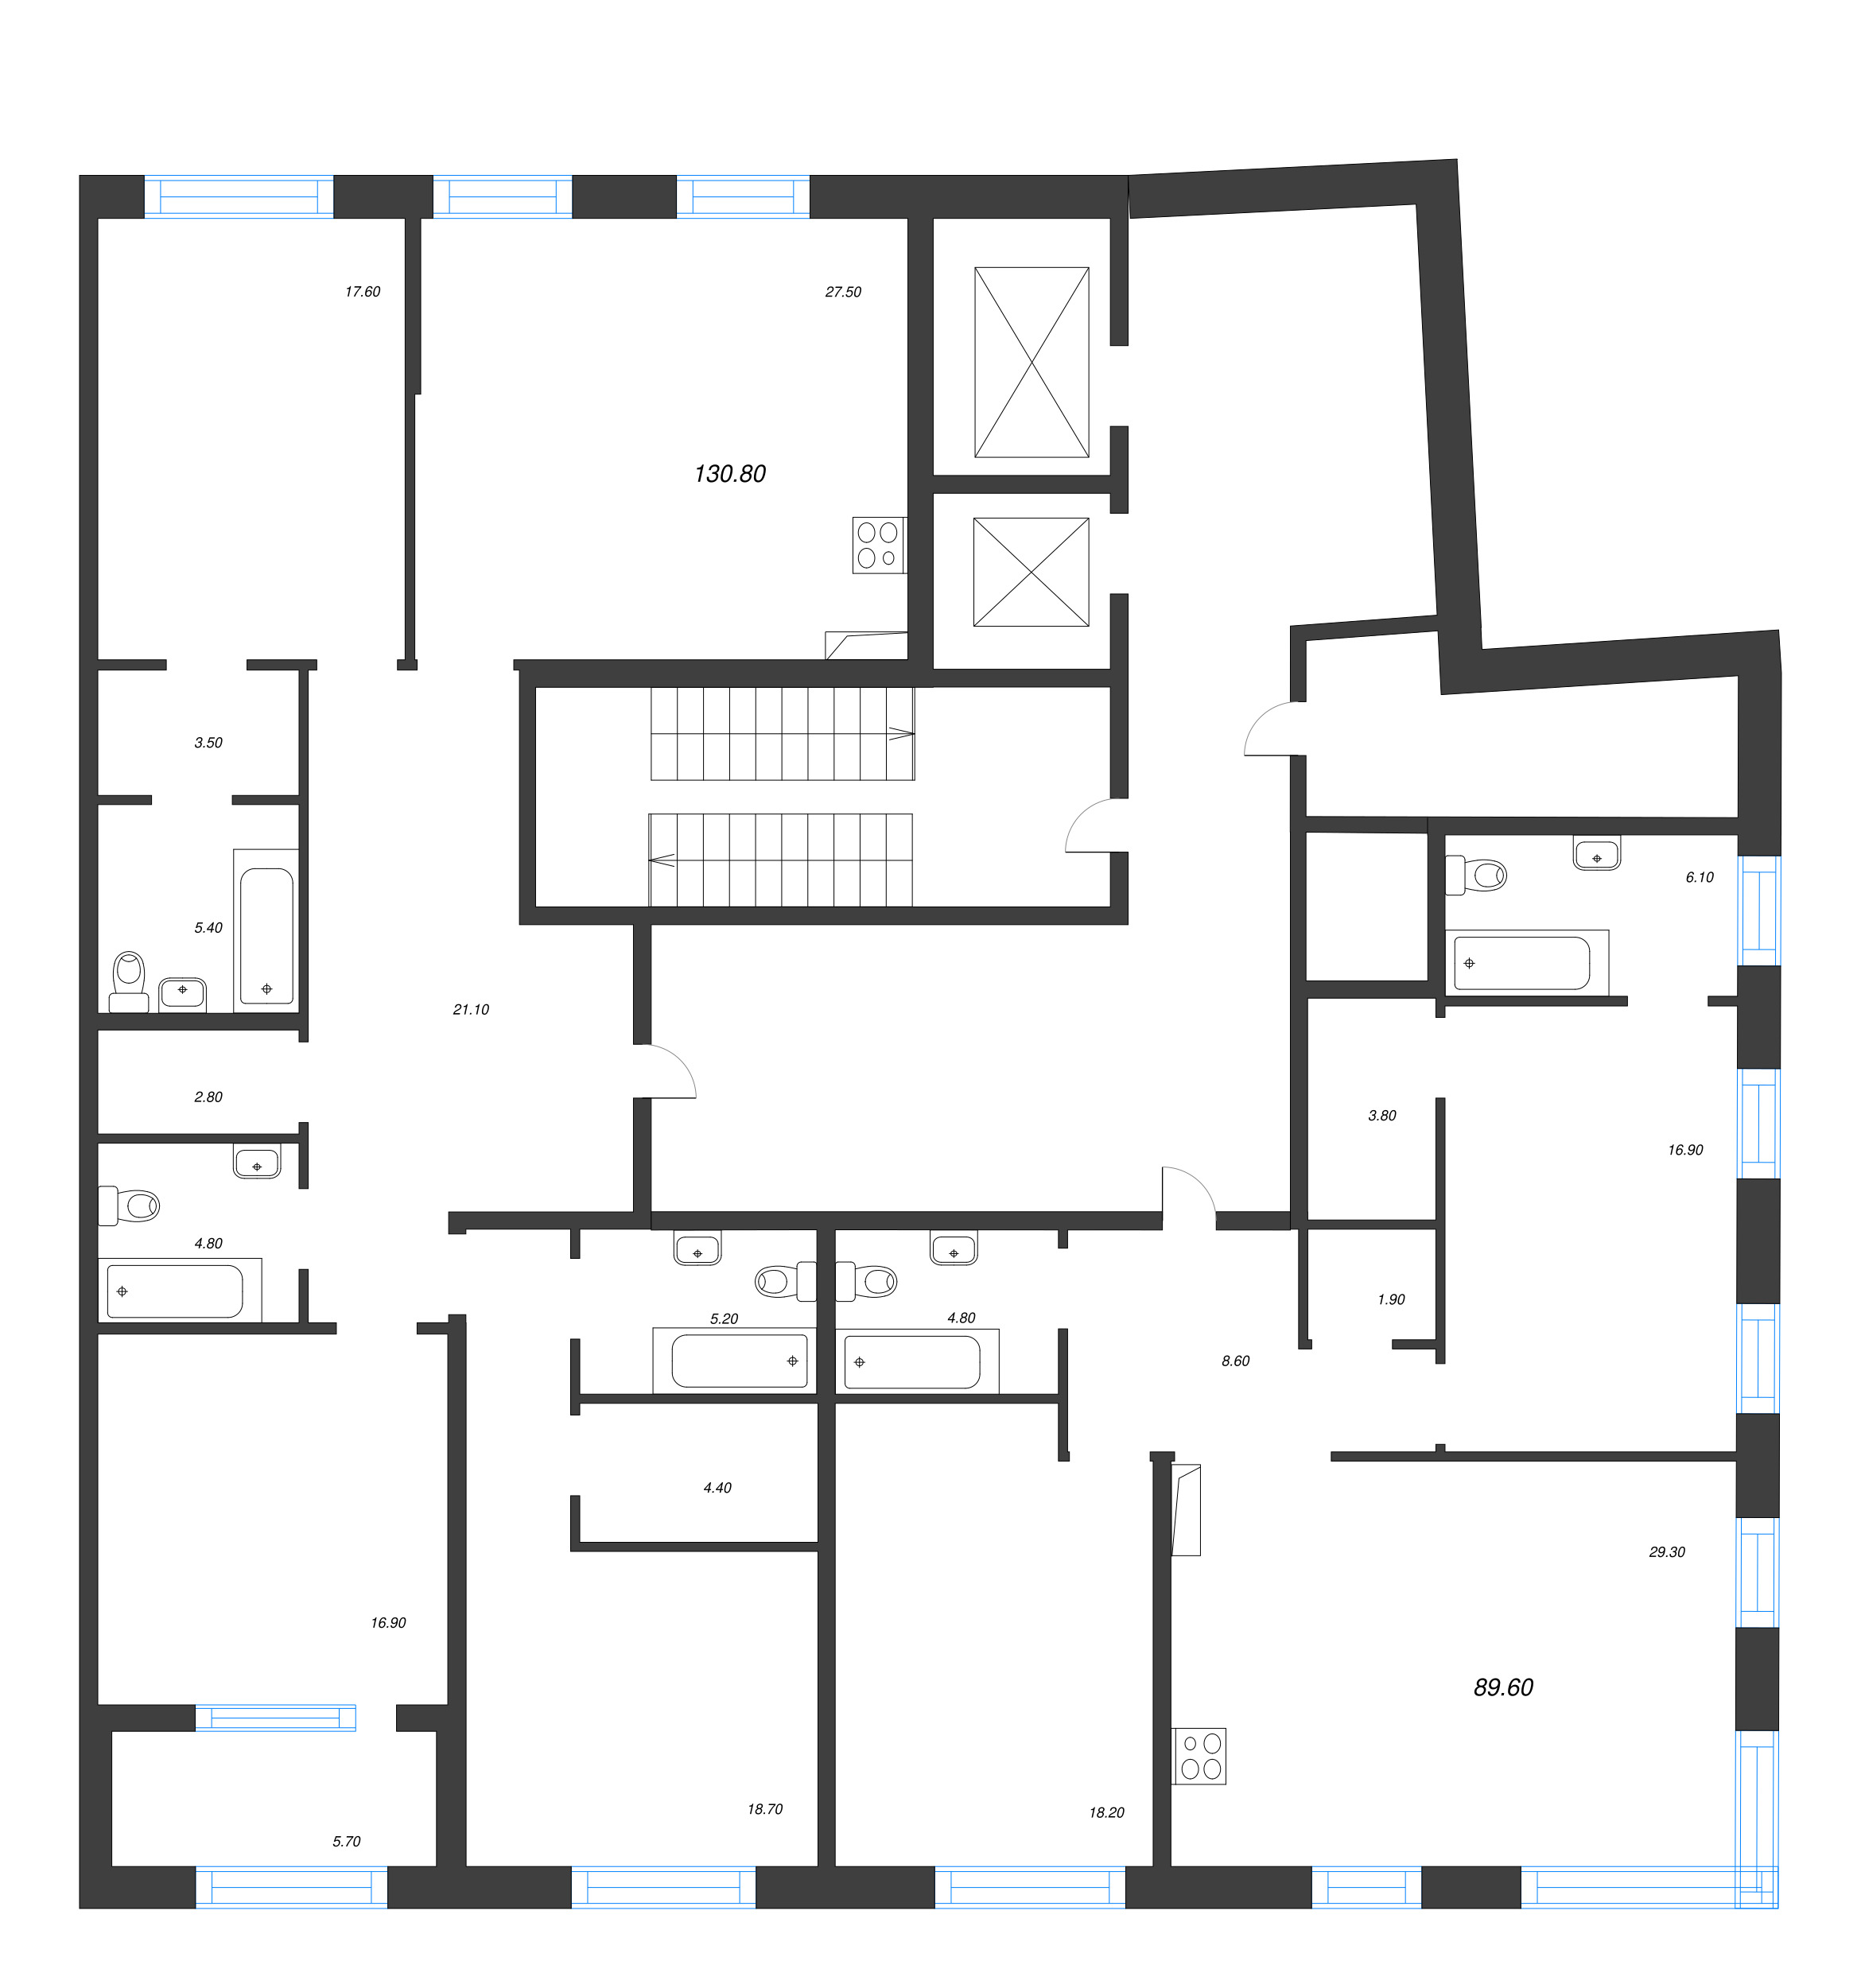 3-комнатная (Евро) квартира, 89.6 м² в ЖК "ЛДМ" - планировка этажа